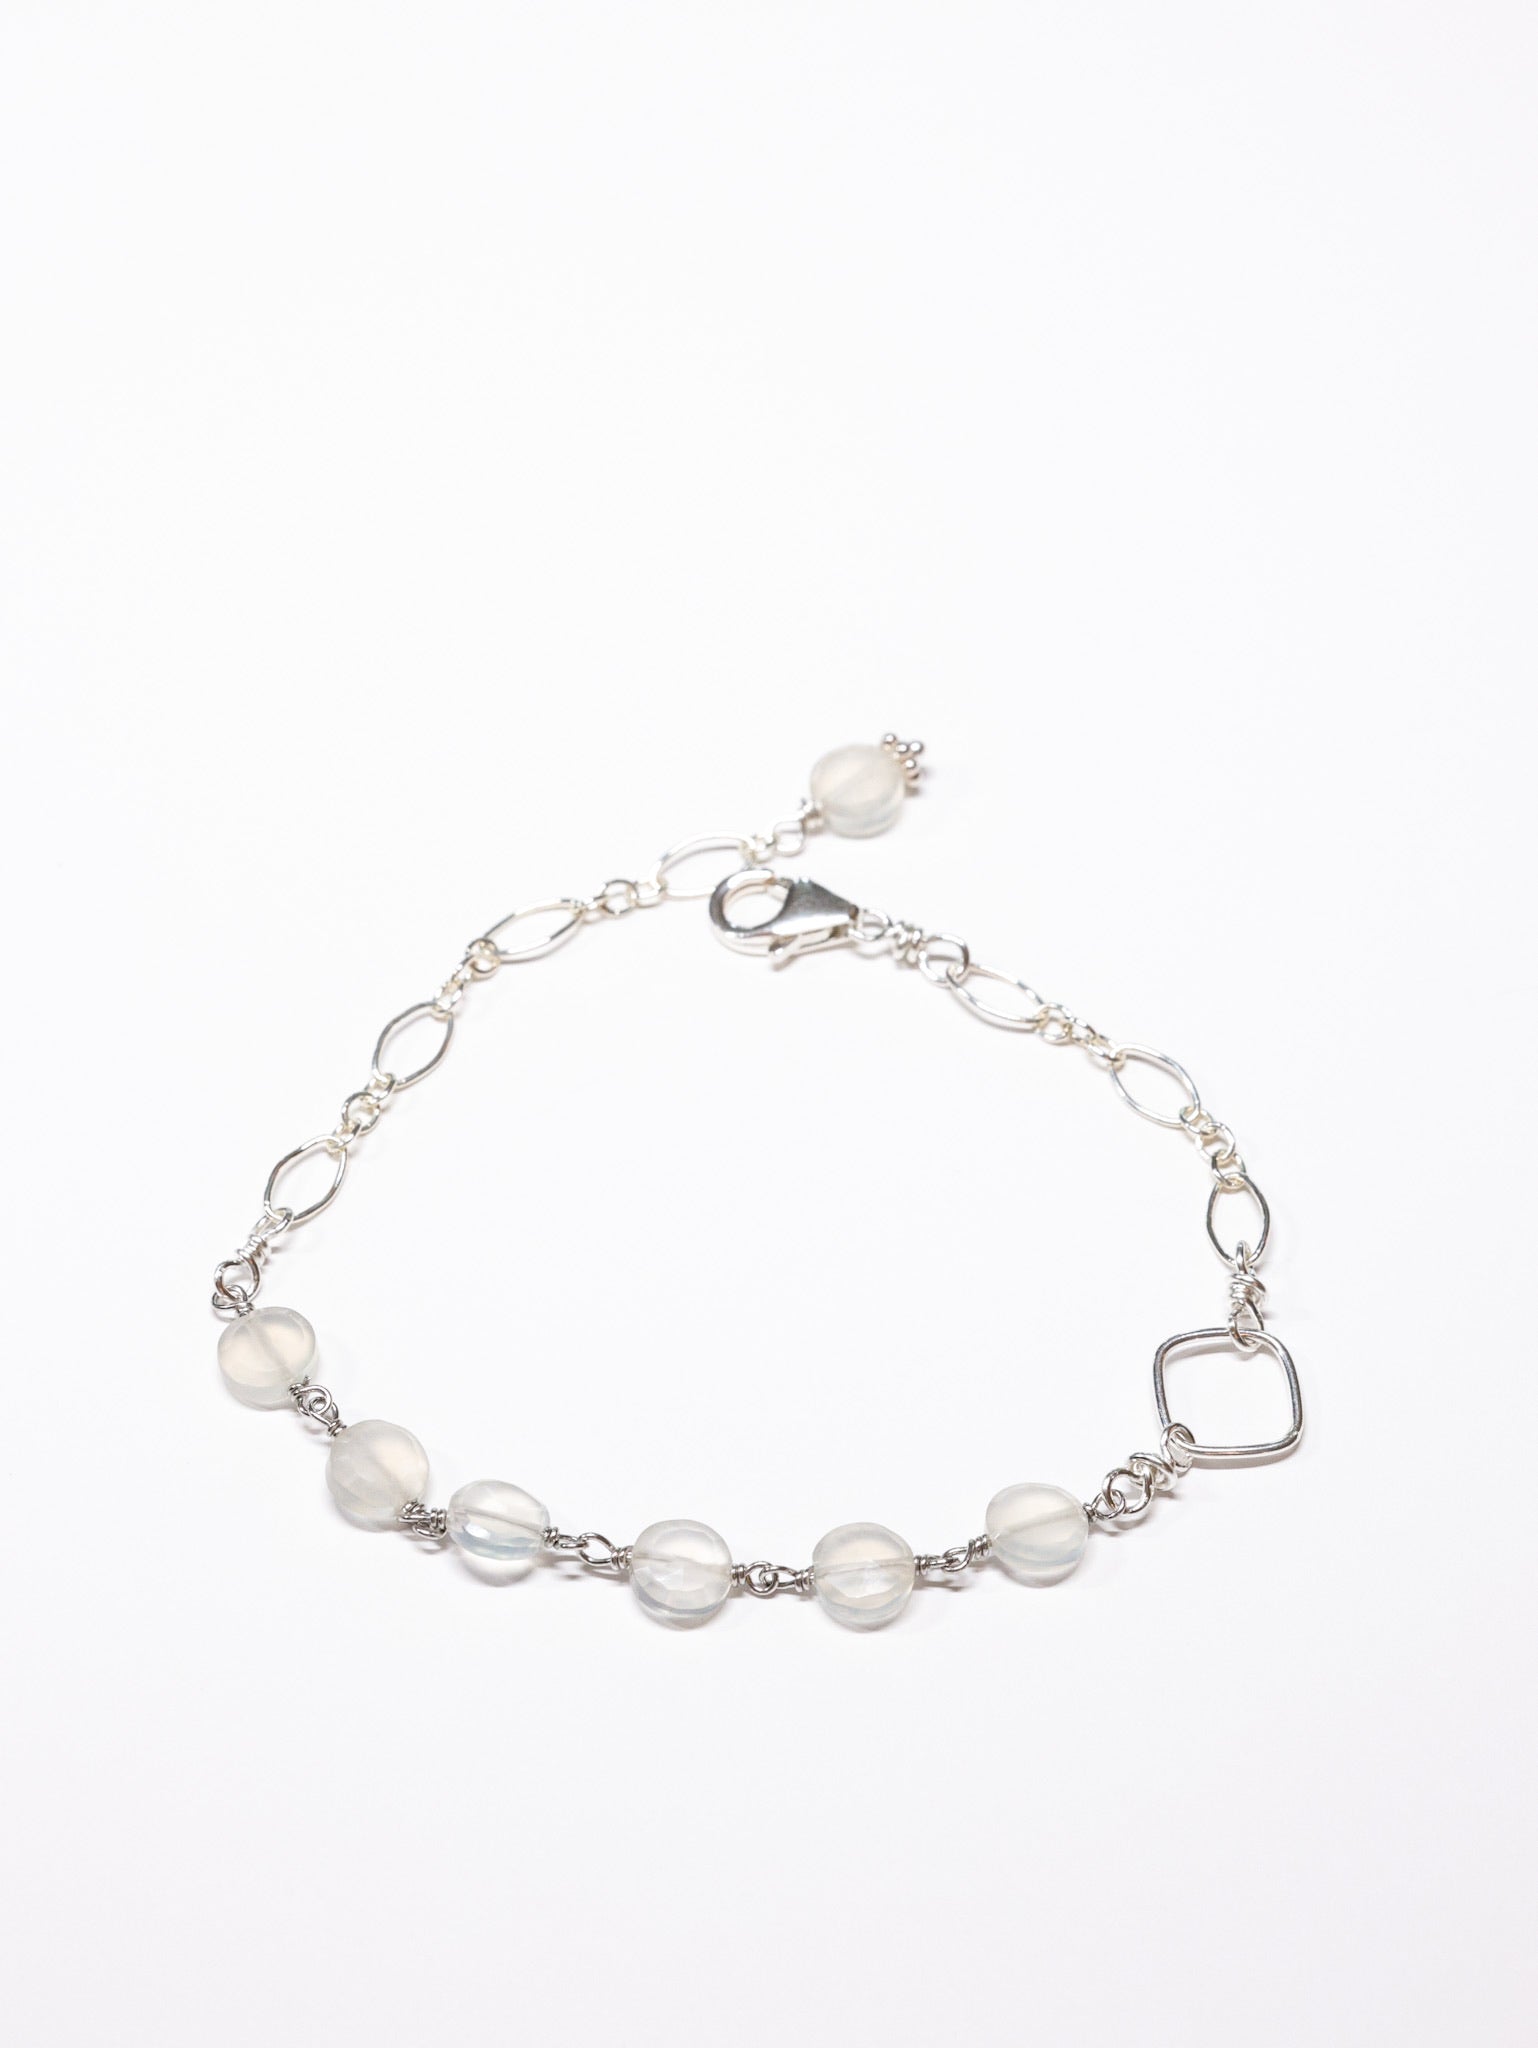 Moonstone Bracelet -Sterling Silver